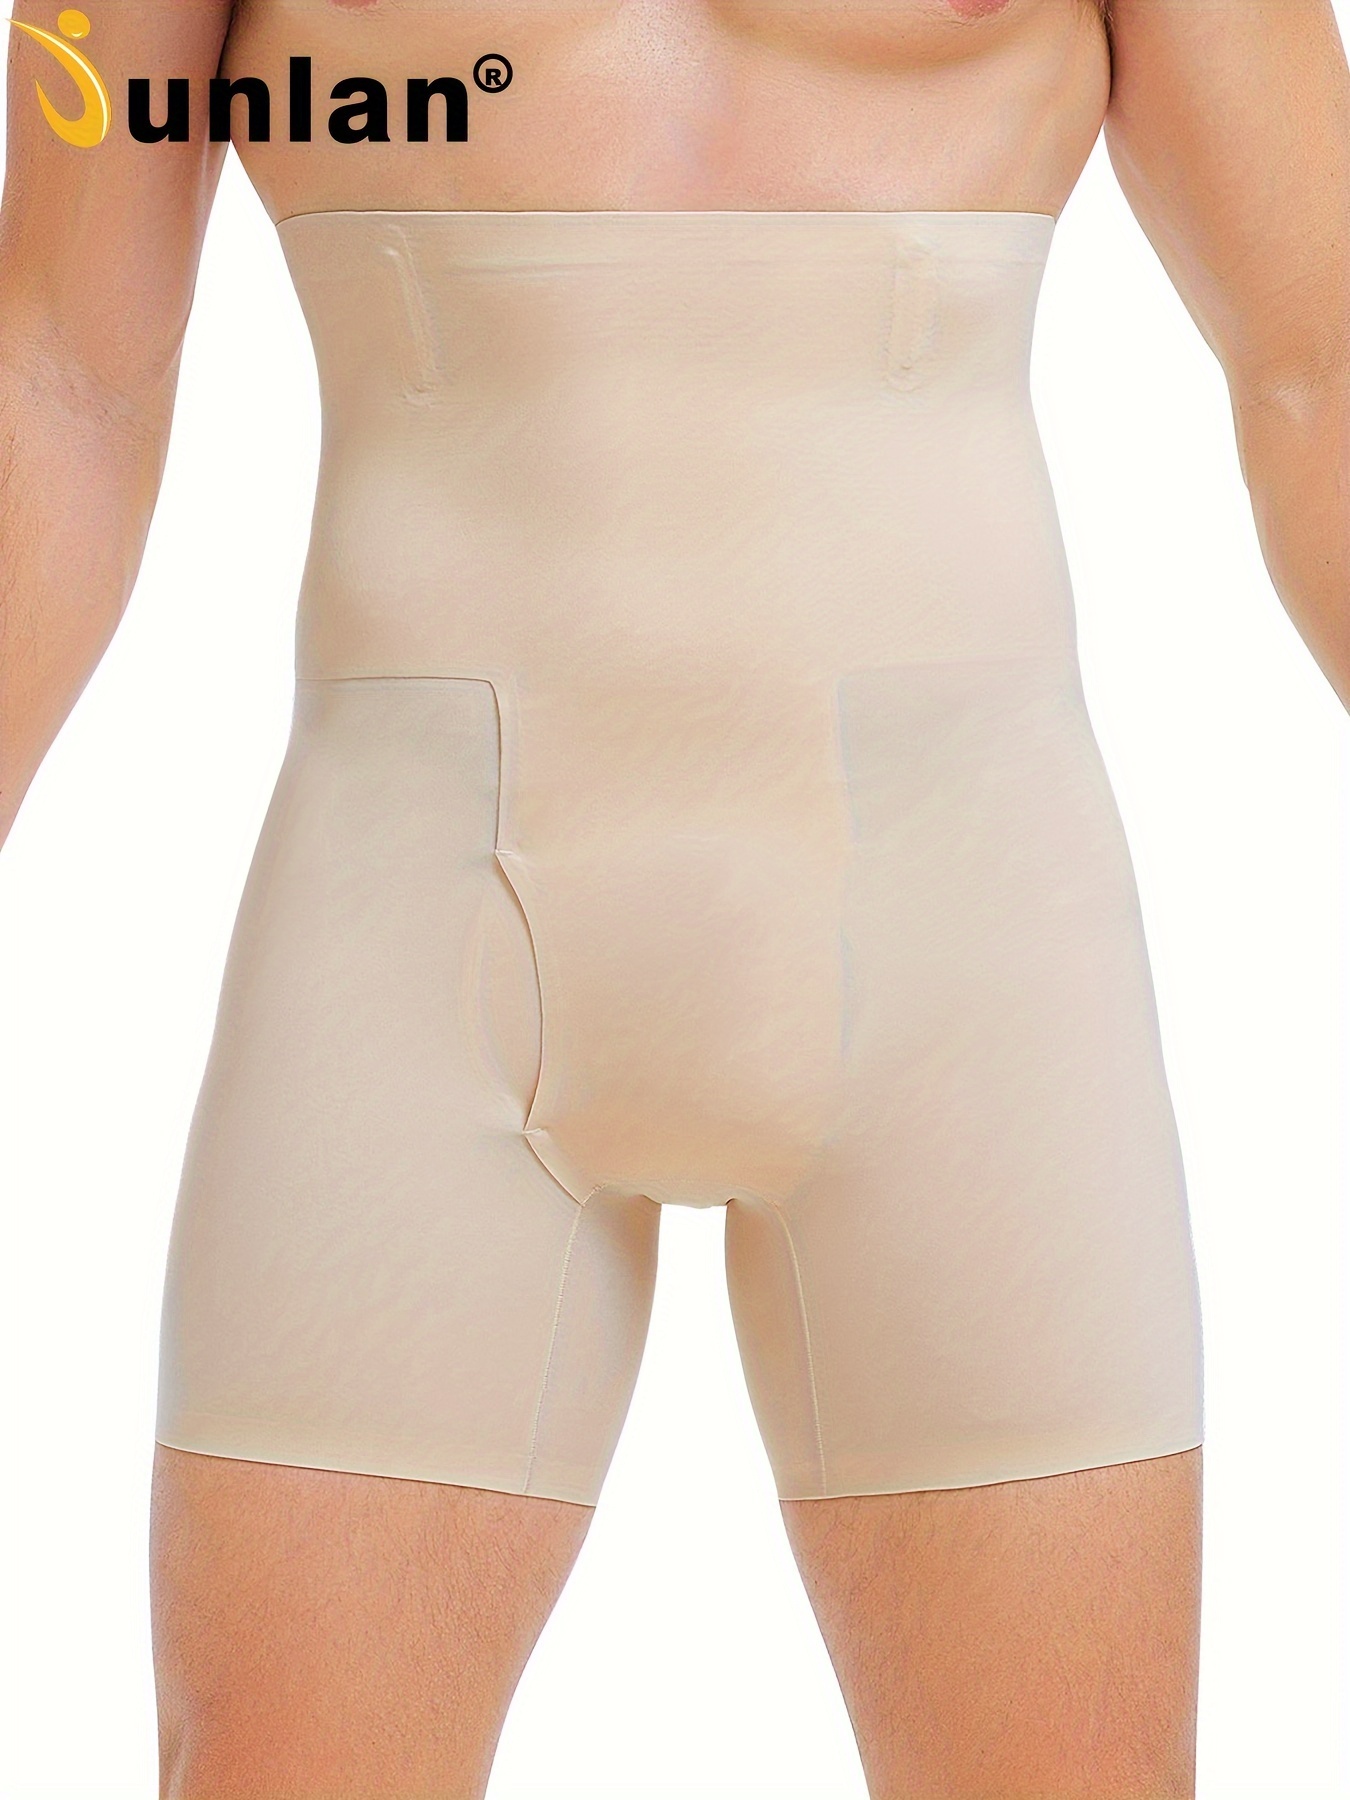 junlan mens shapewear tummy control shorts slimming body shaper high waist compression boxers briefs